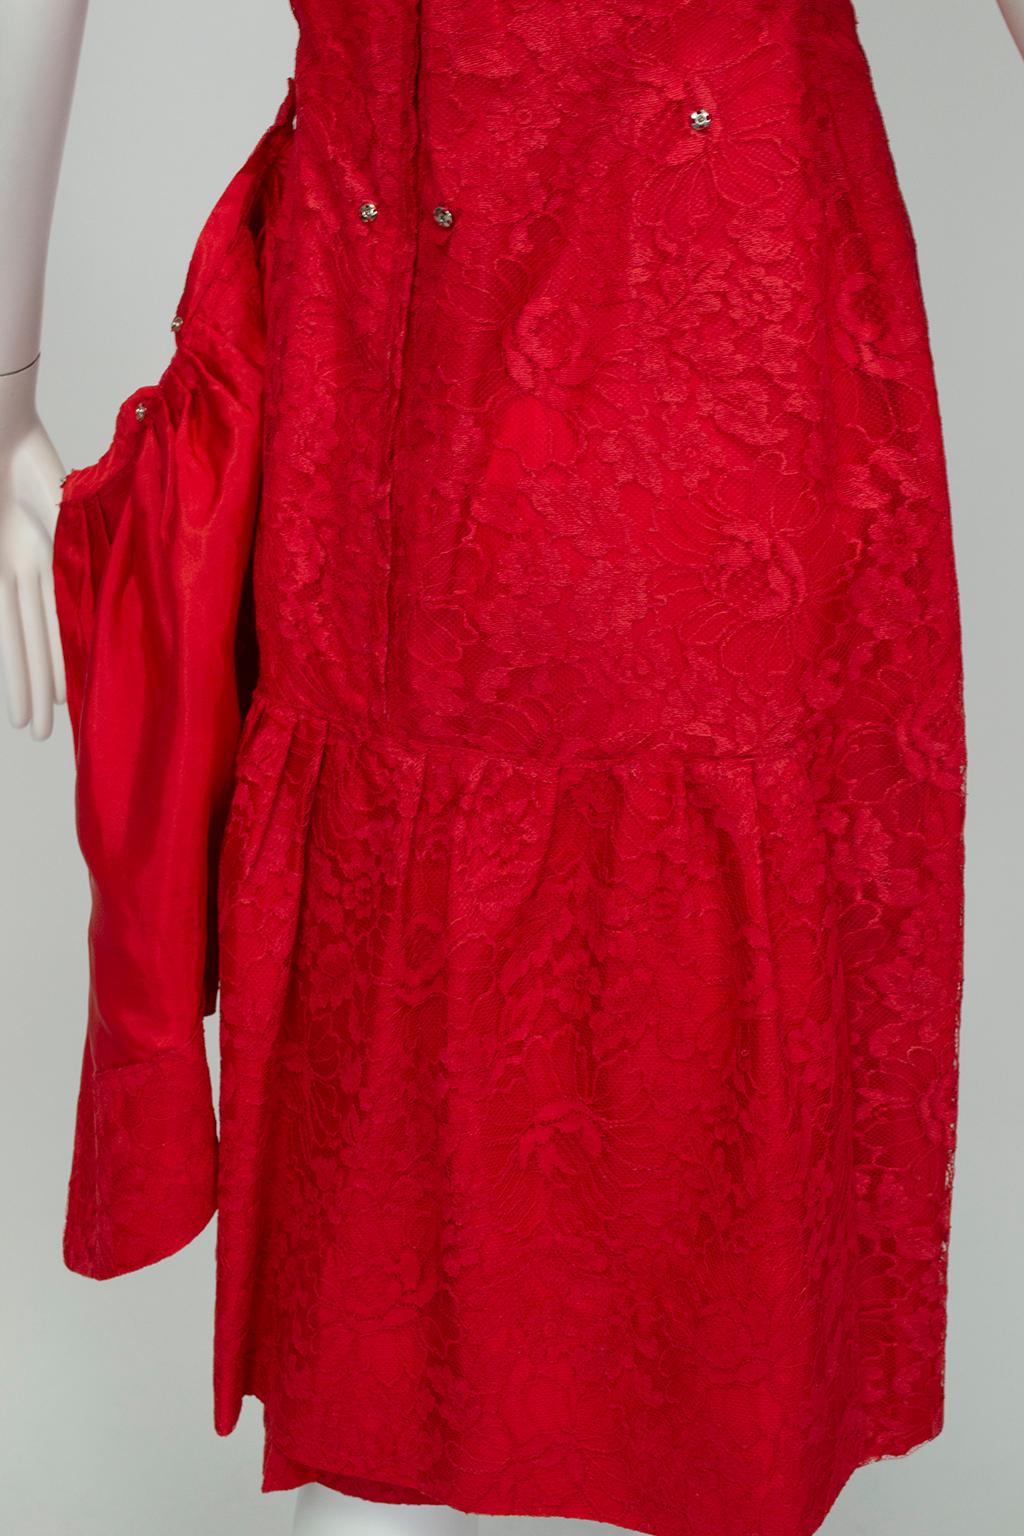 Jacques Cassia Haute Couture Five-Alarm Red Backless Lace Bustle Dress -M, 1960s 5